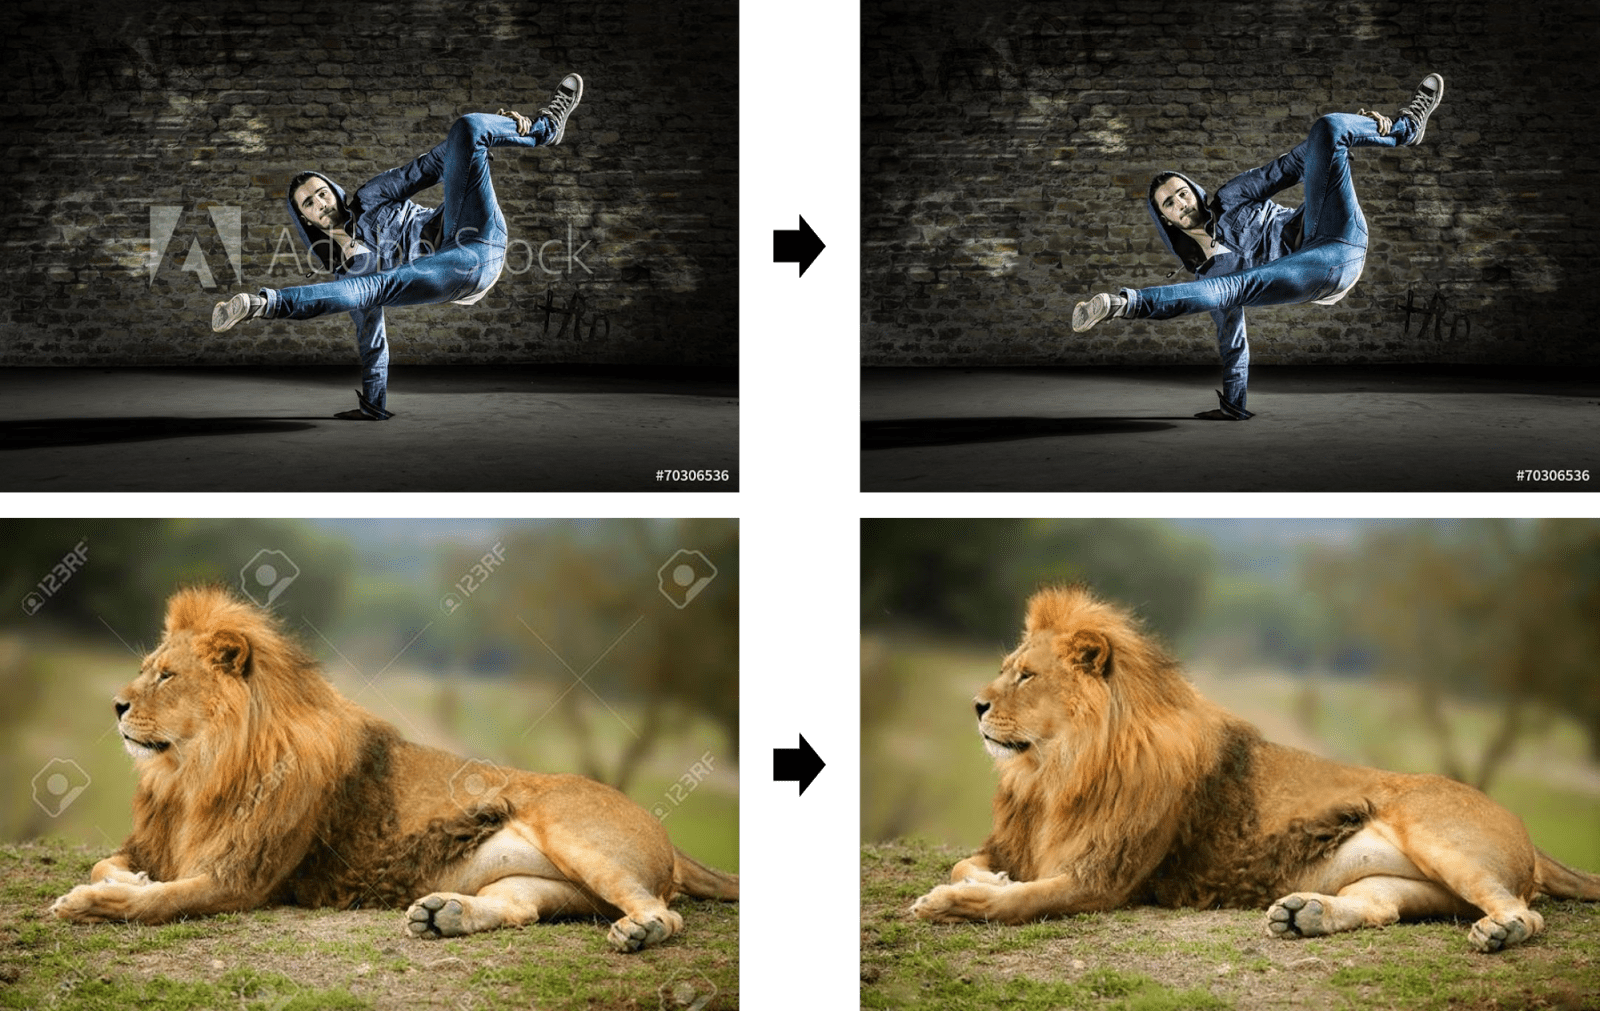 how to remove stock photo watermark photoshop